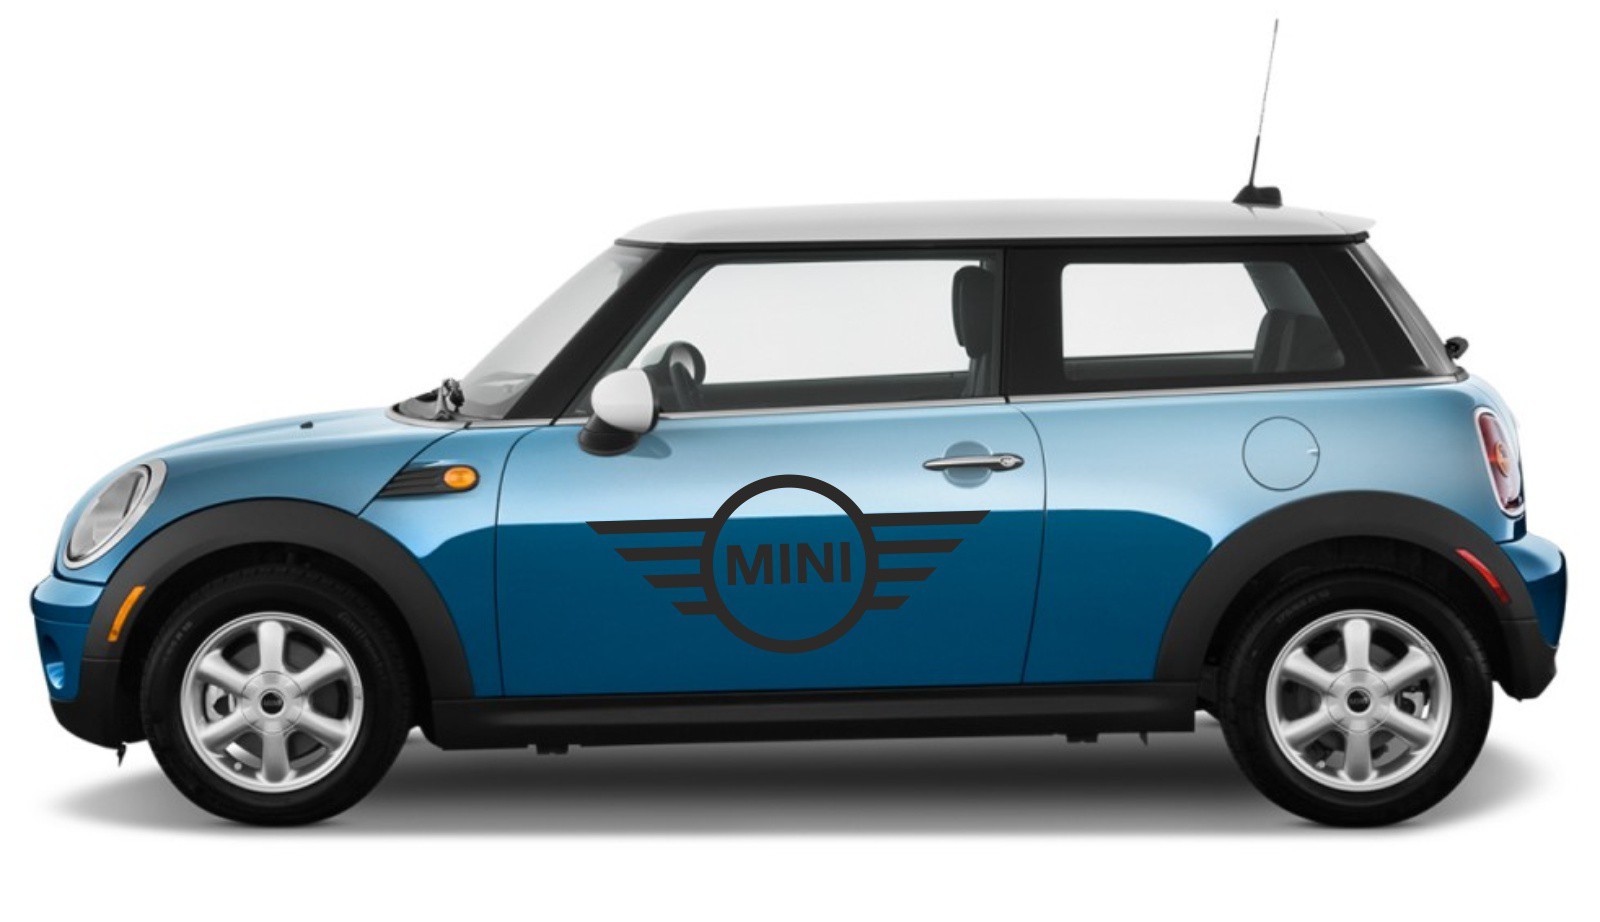 Naklejki Mini Cooper logo na drzwi